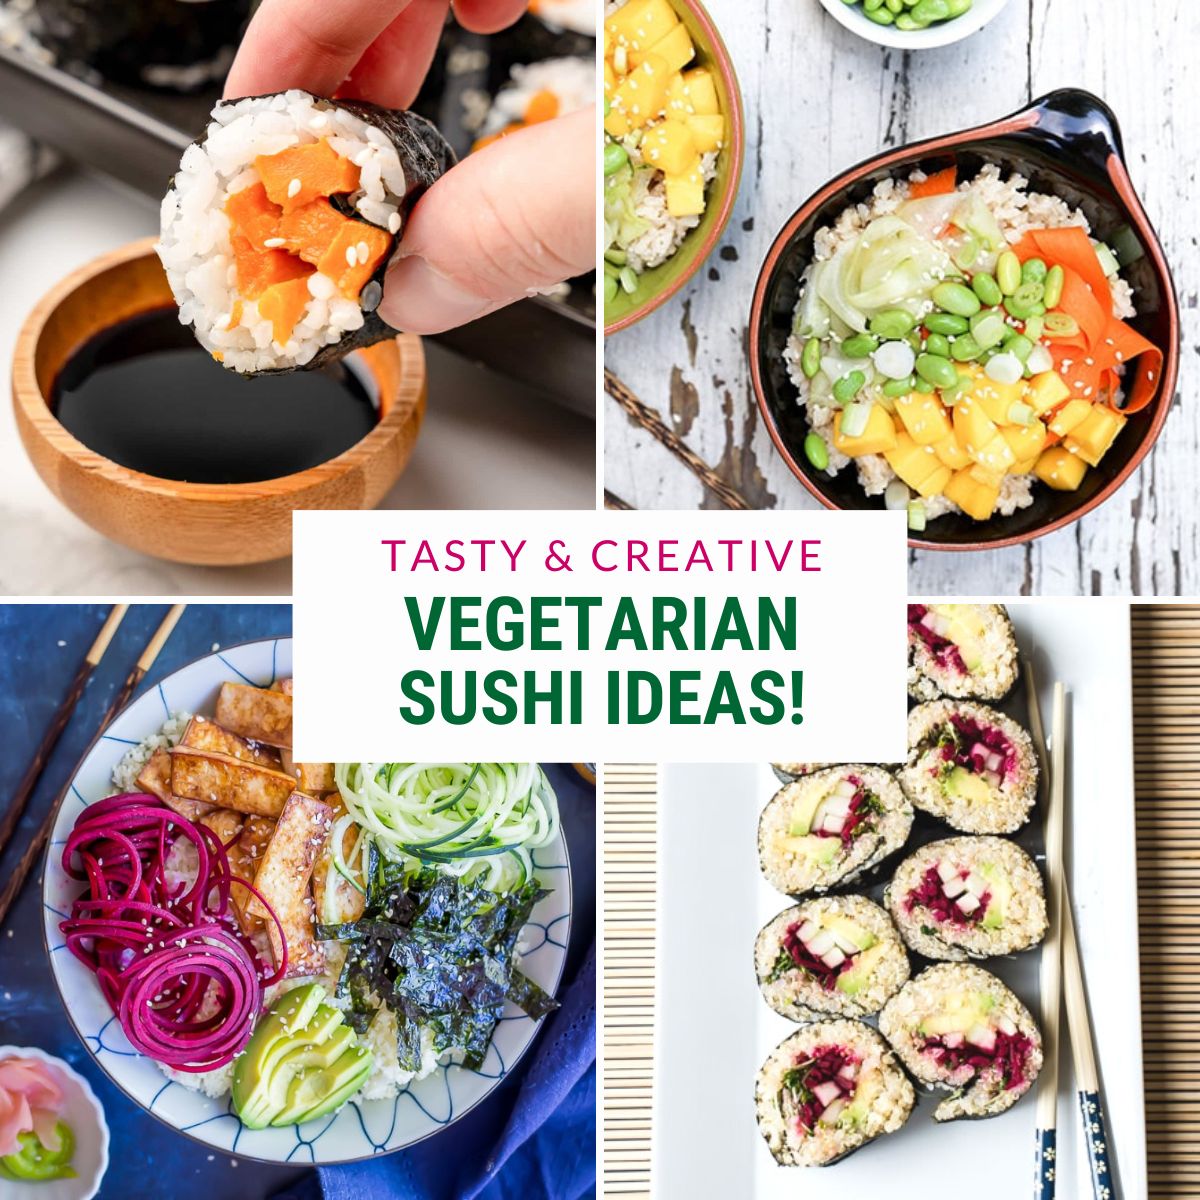 https://ohmyveggies.com/wp-content/uploads/2017/09/vegetarian-sushi.jpg